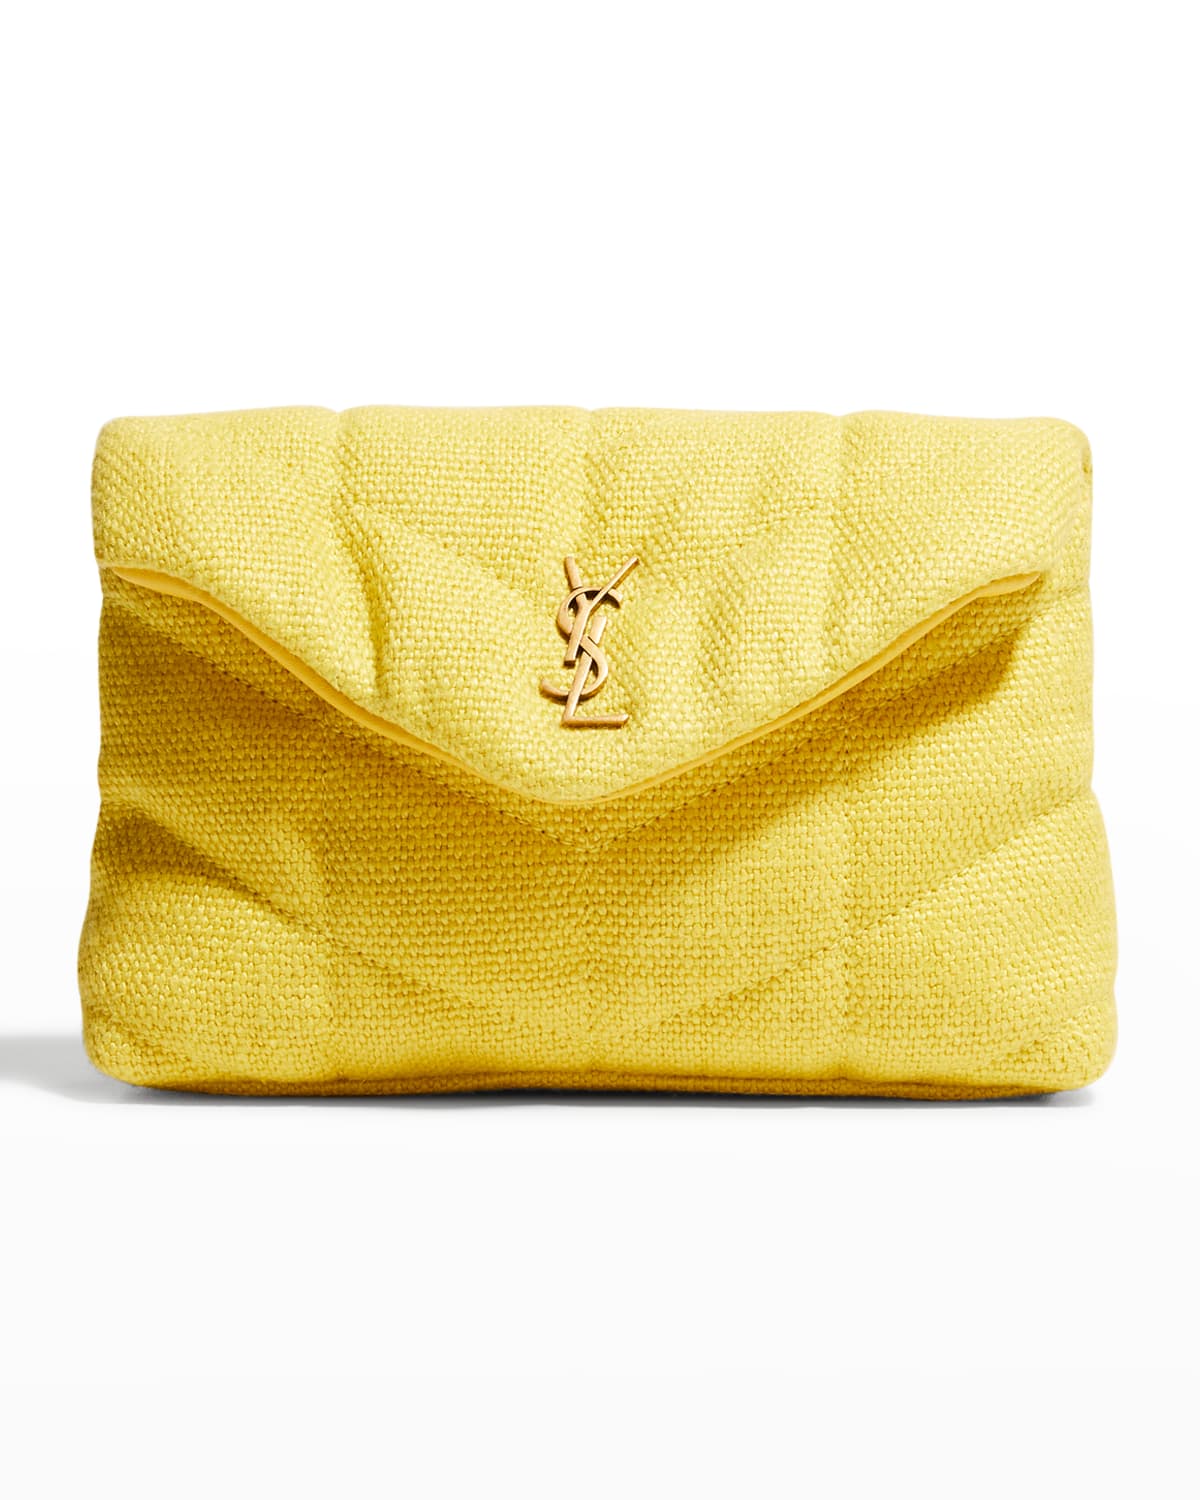 YSL Small Puffer Canvas Clutch Bag | Neiman Marcus